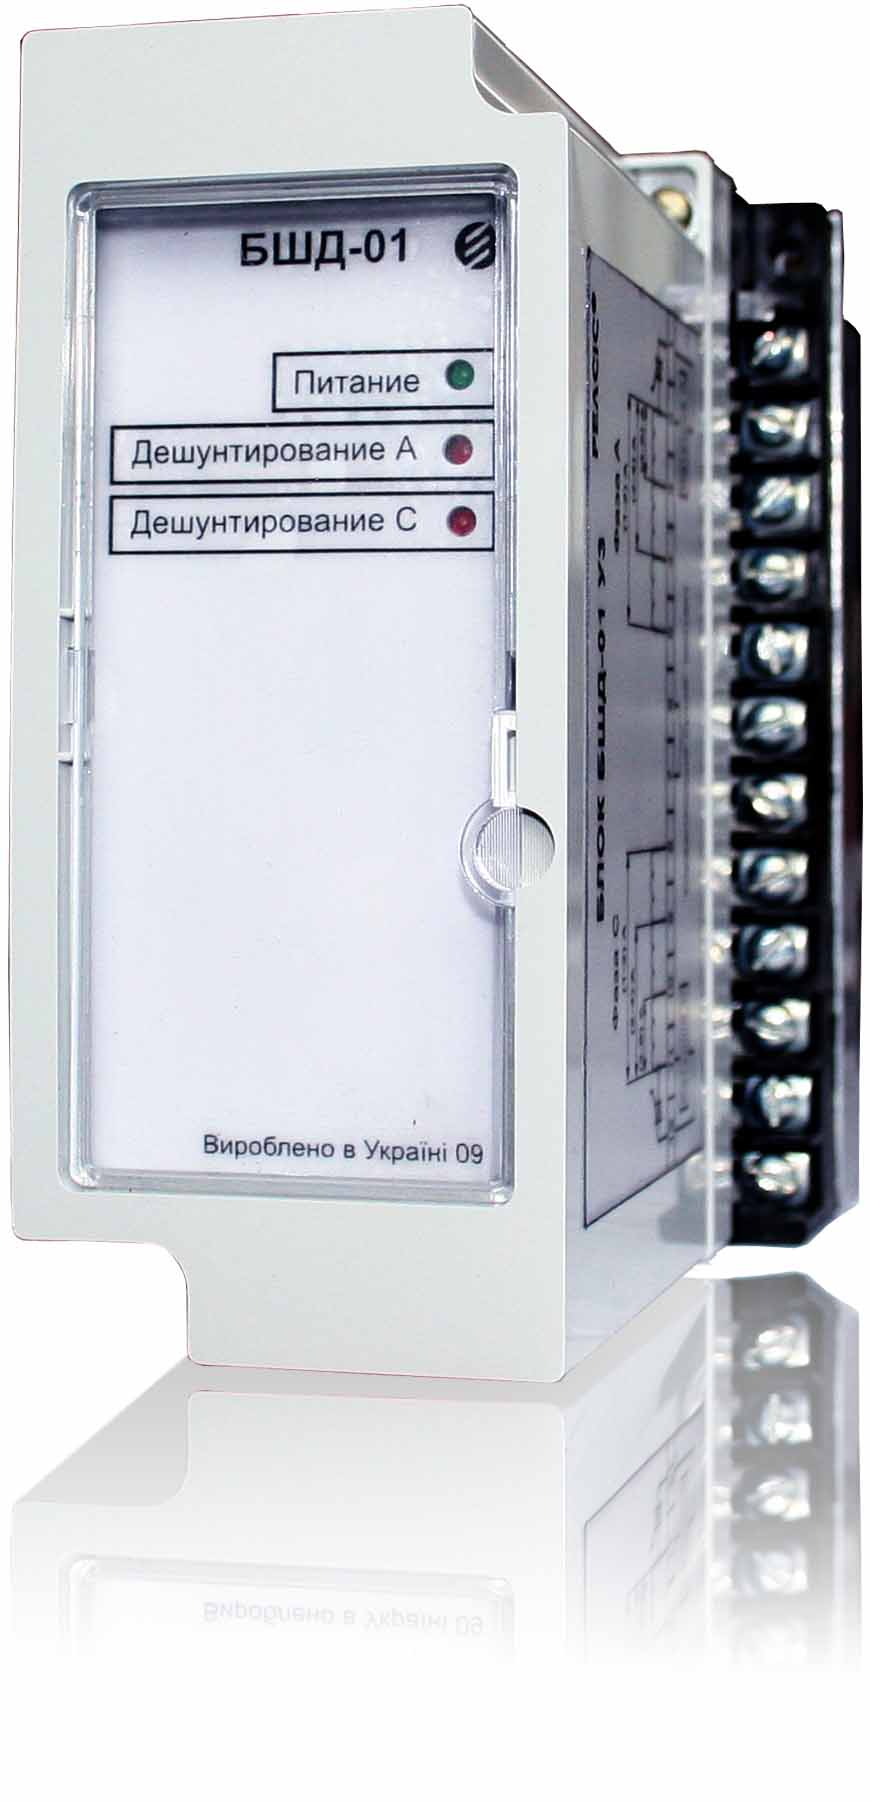 БШД-01 - Блок шунтирования / дешунтирования